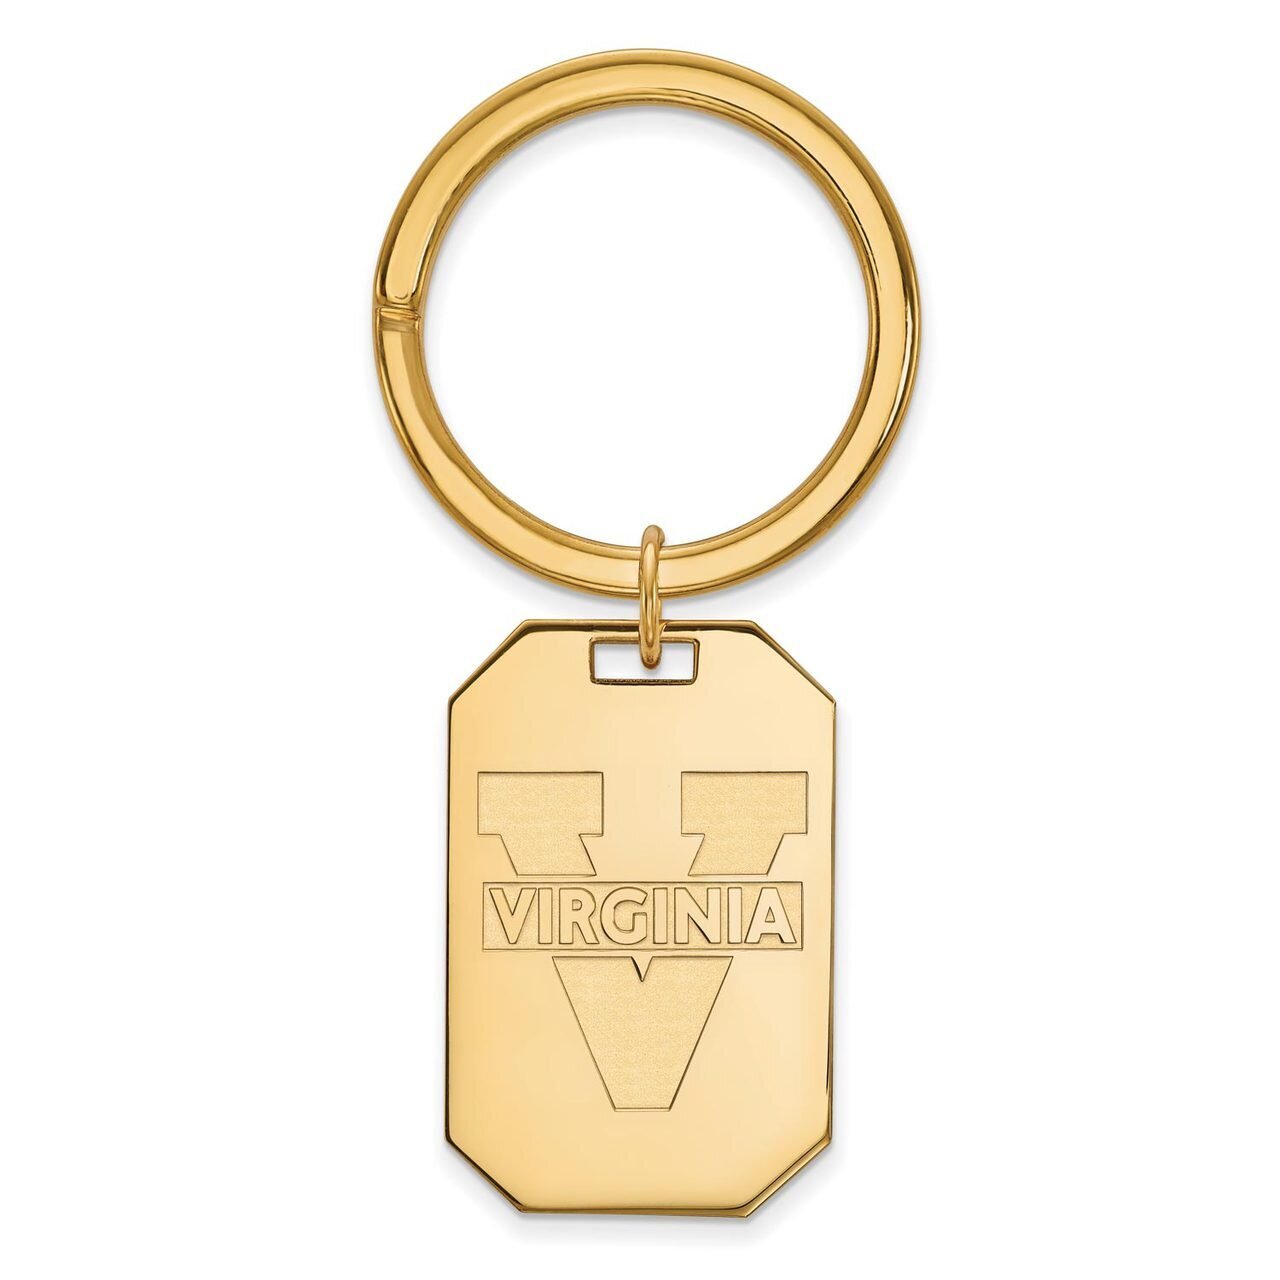 University of Virginia Key Chain Gold-plated Silver GP026UVA